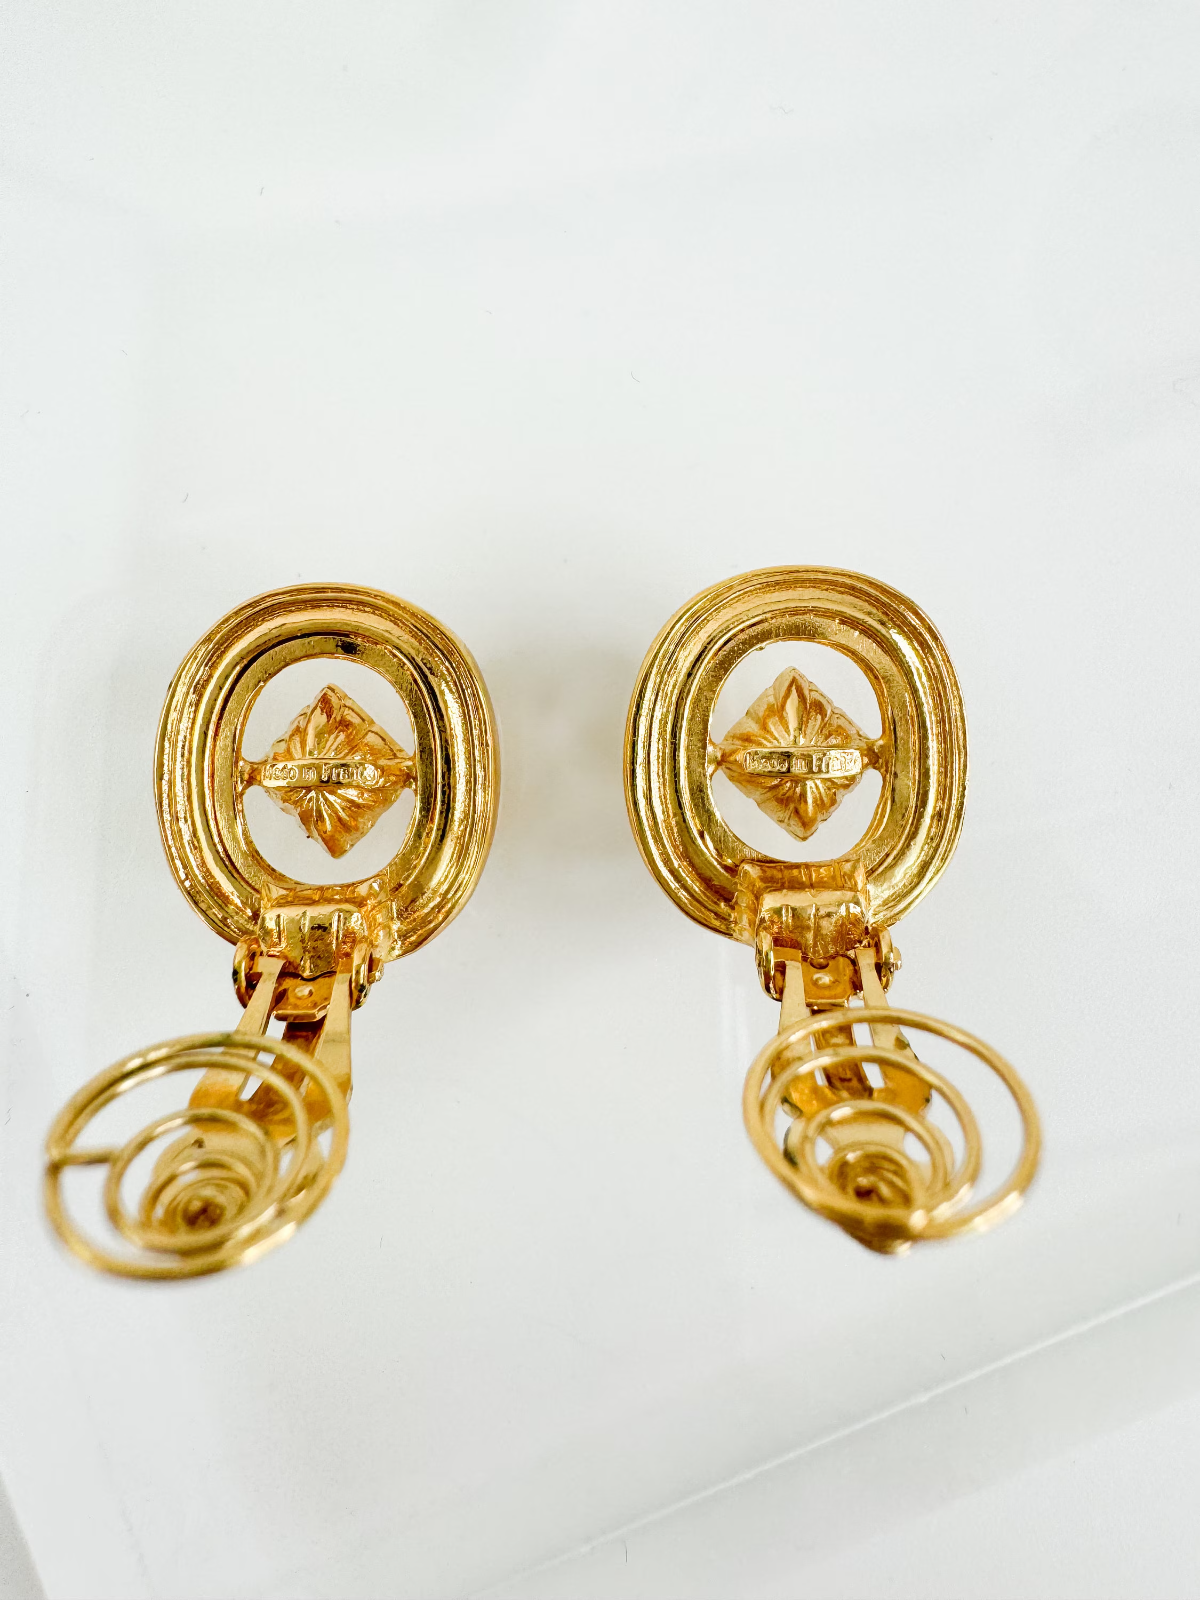 Vintage YSL Yves Saint Laurent Earrings, Gold Tone Oval Earrings, Made in France, Bridal earrings, Clip-on Earrings, Earrings large gold